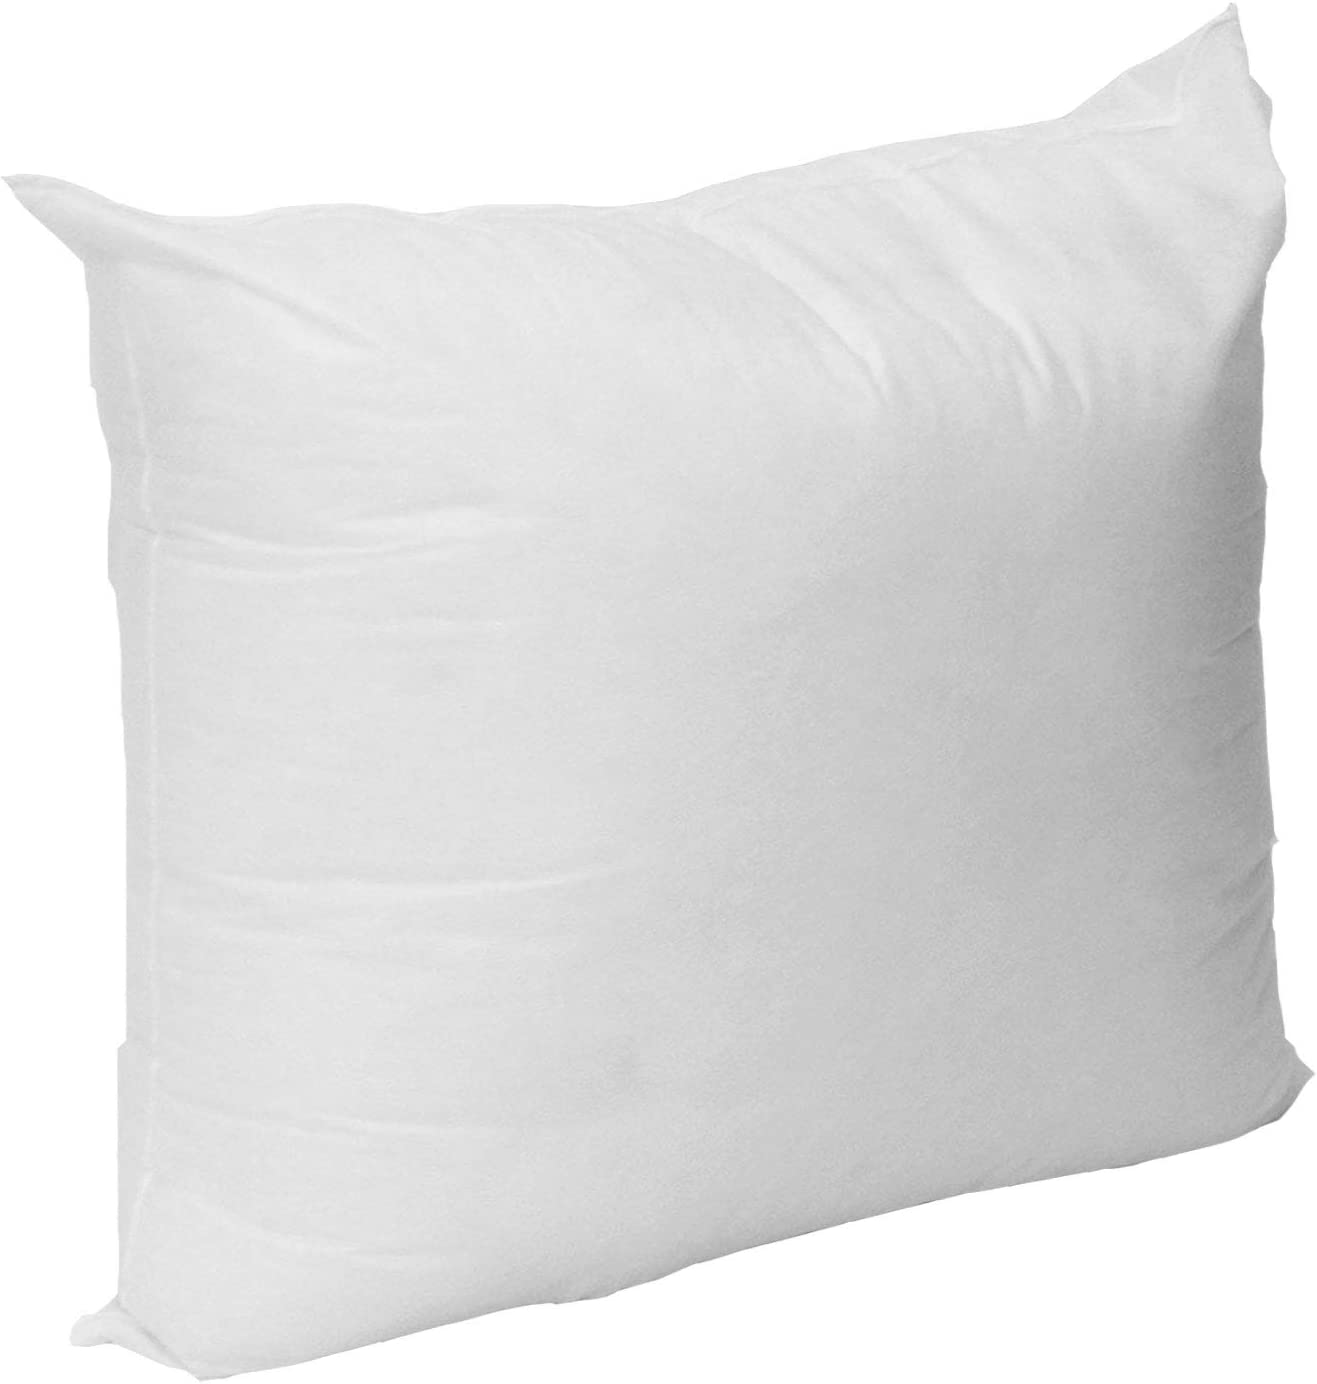 Mybecca Pillow Sham Stuffer Hypoallergenic Square Insert, 20" x 20"